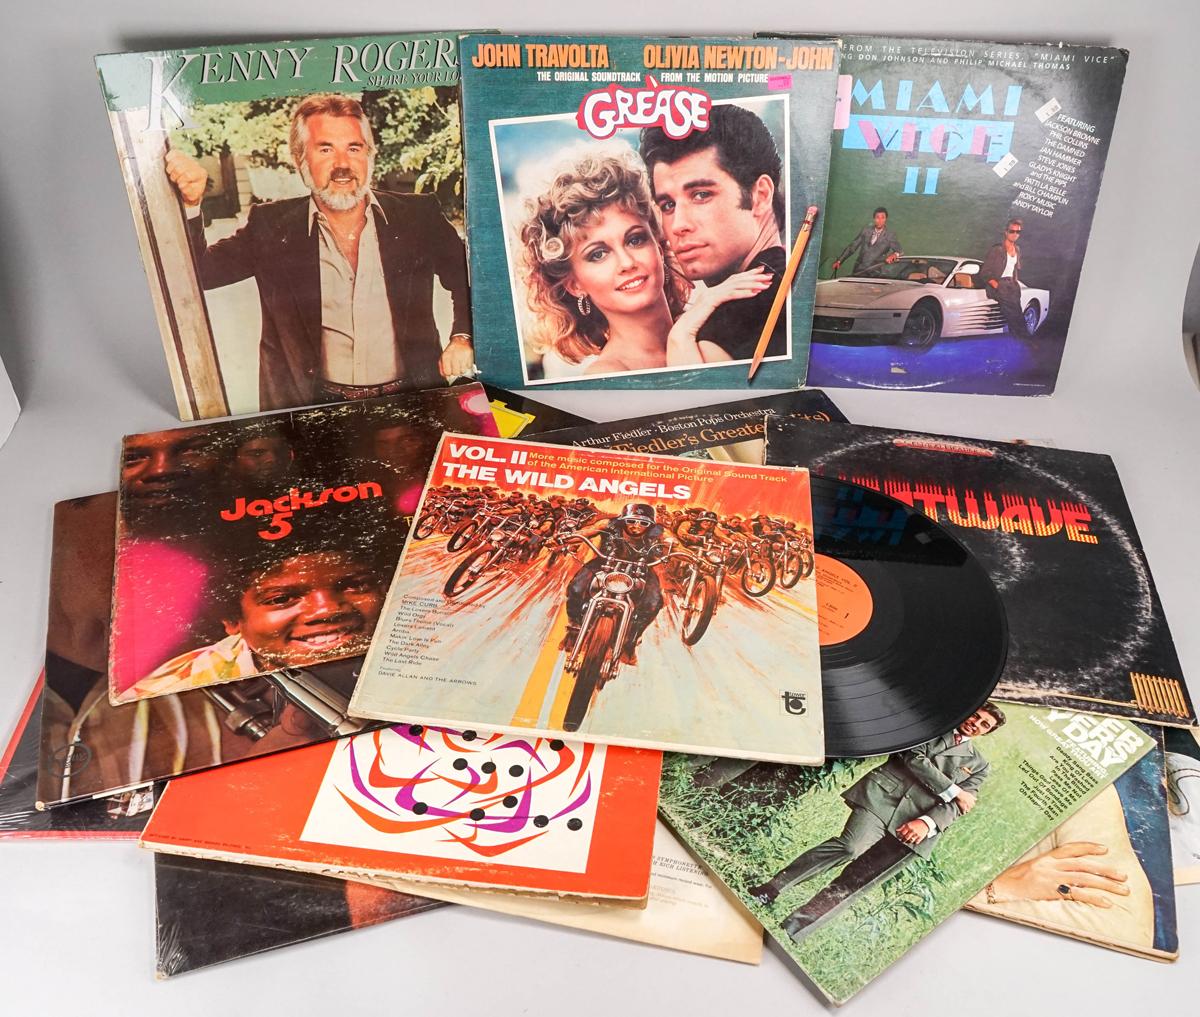 Vintage Vinyl: Grease Soundtrack, Kenny Rodgers, Jackson 5, Miami Vice II & More